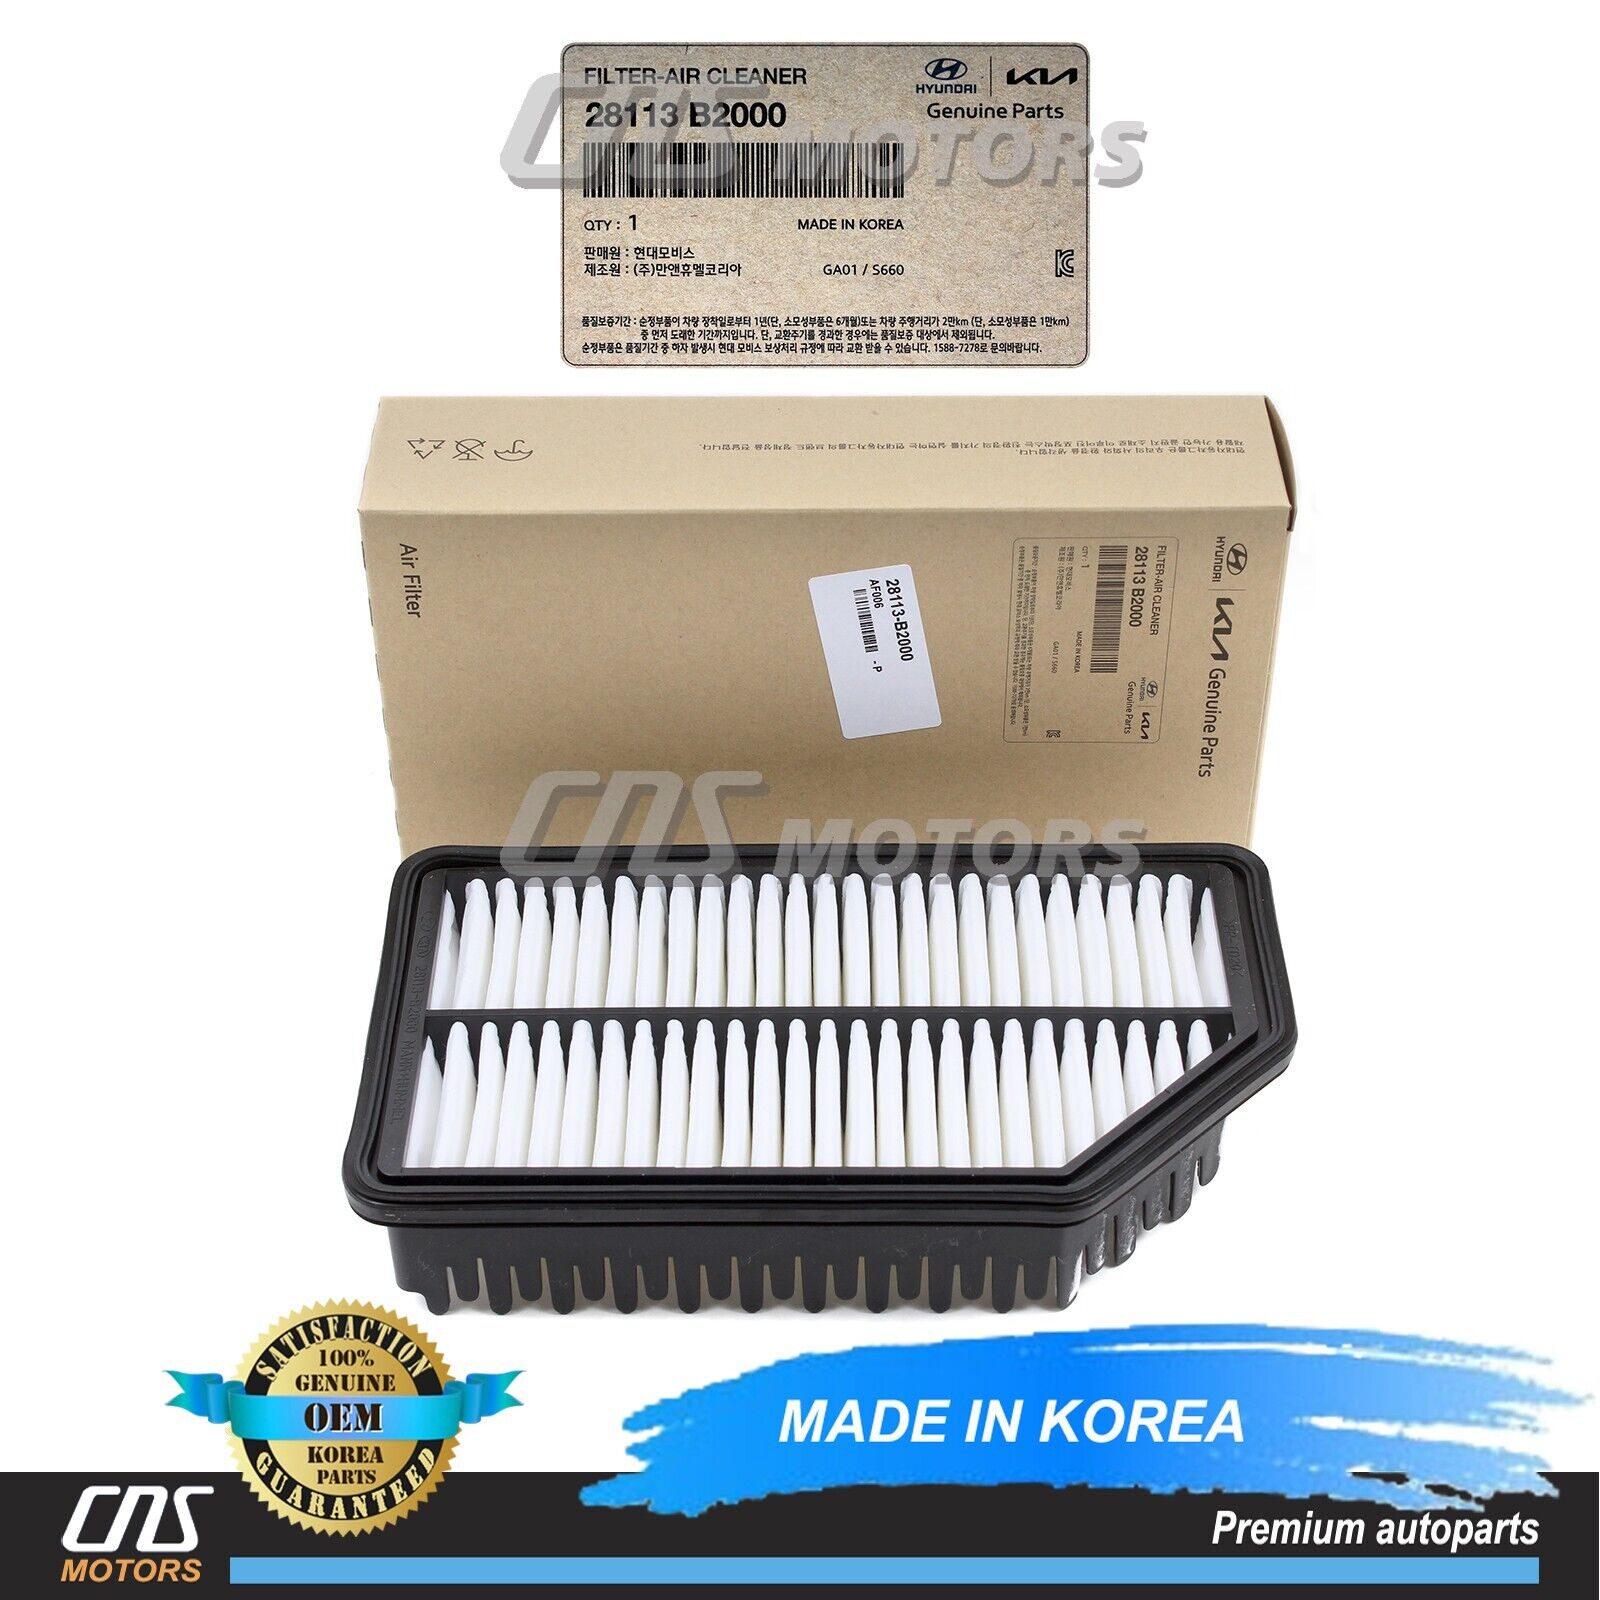 ✅GENUINE✅ Air Cleaner Filter for 2014-2019 Kia Soul 28113B2000